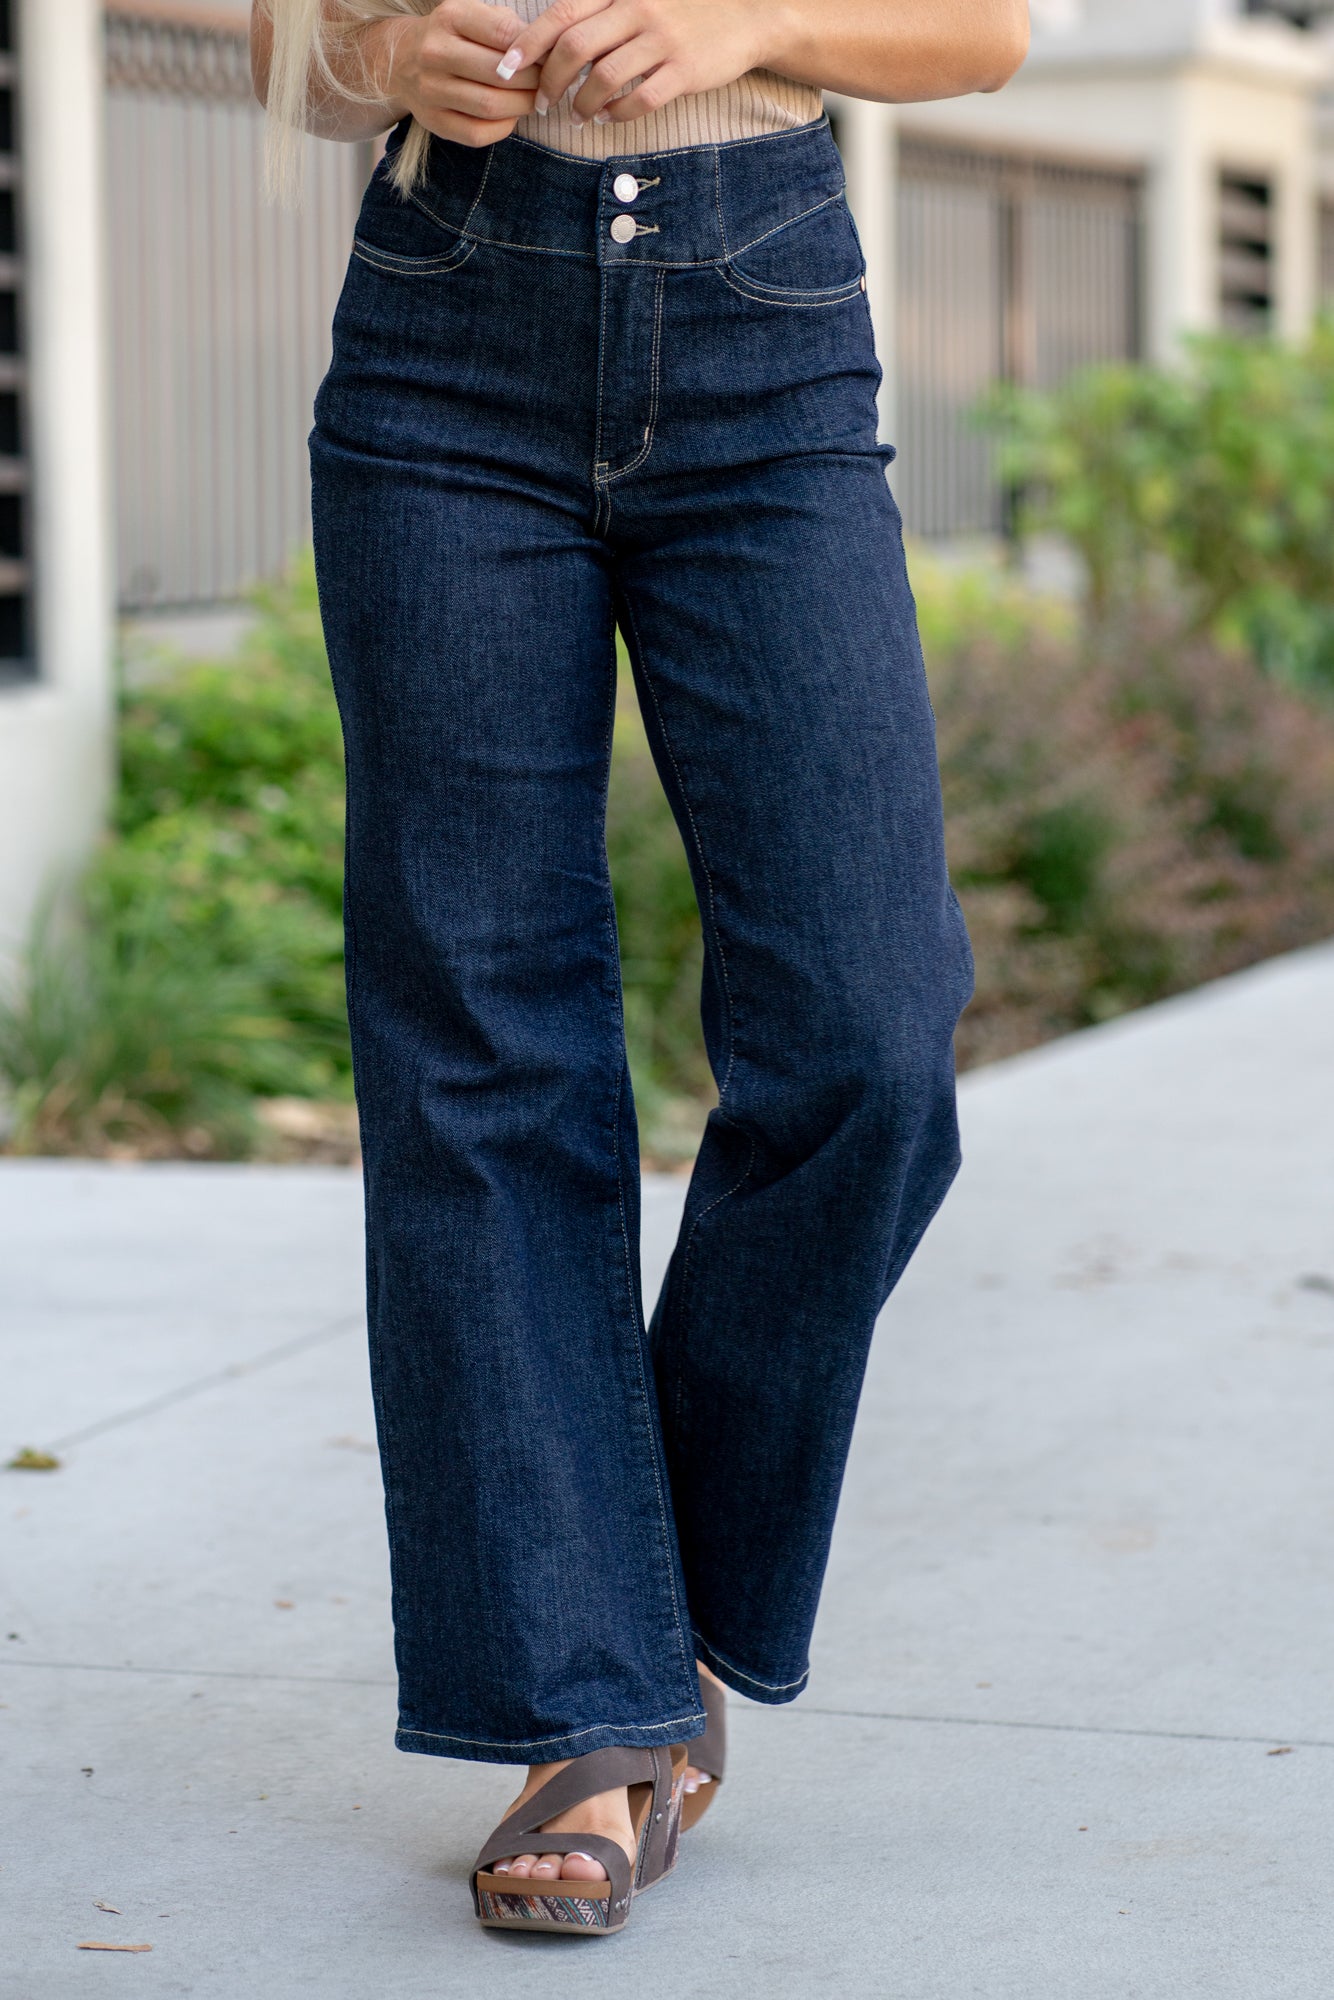 Judy Blue® Ultra High Rise Super Flare Jean - Women's Jeans in